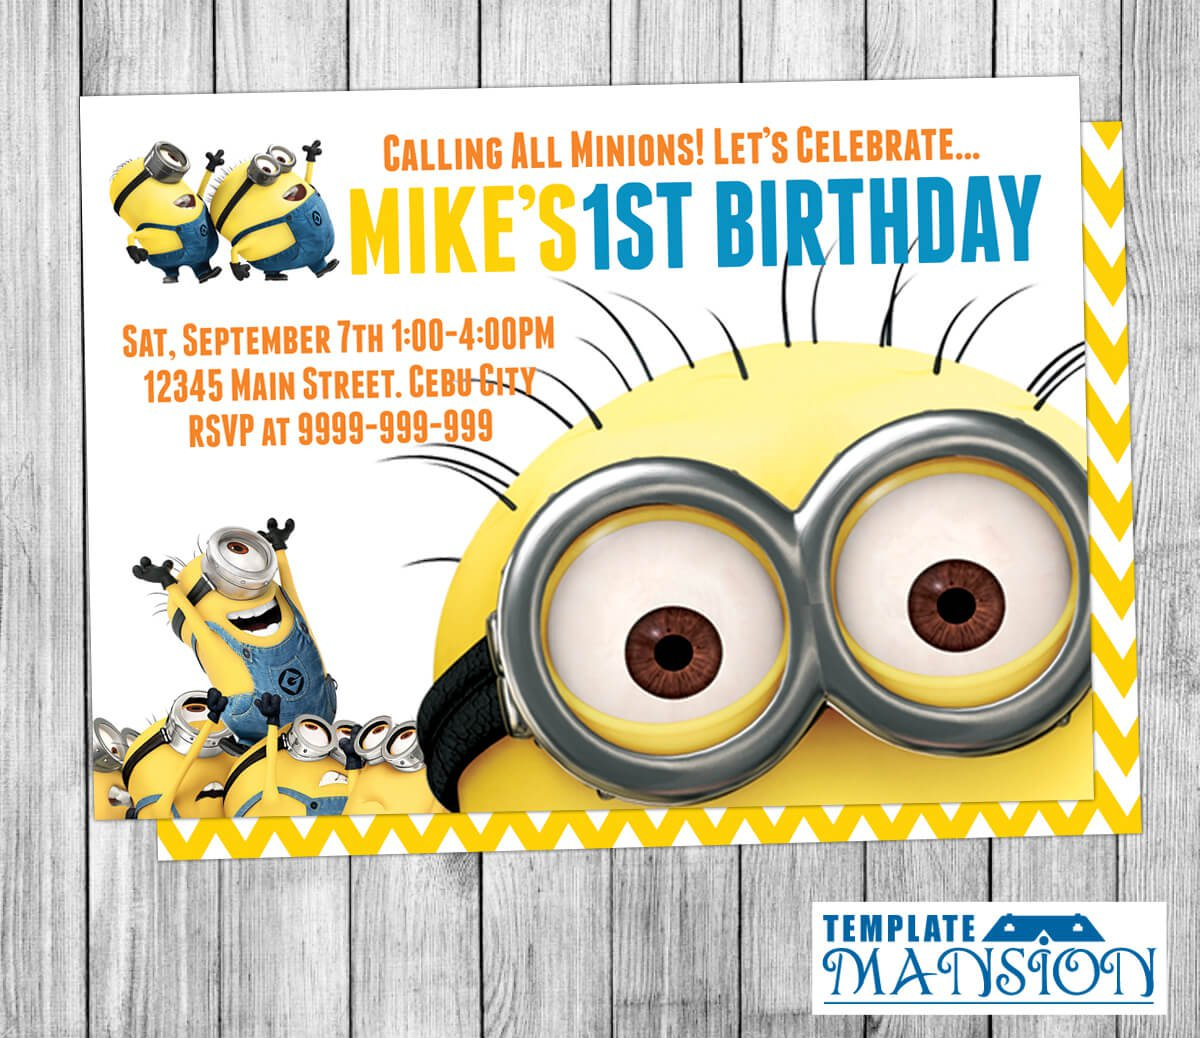 Minion Birthday Invitations : Minion Birthday Invitations Intended For Minion Card Template